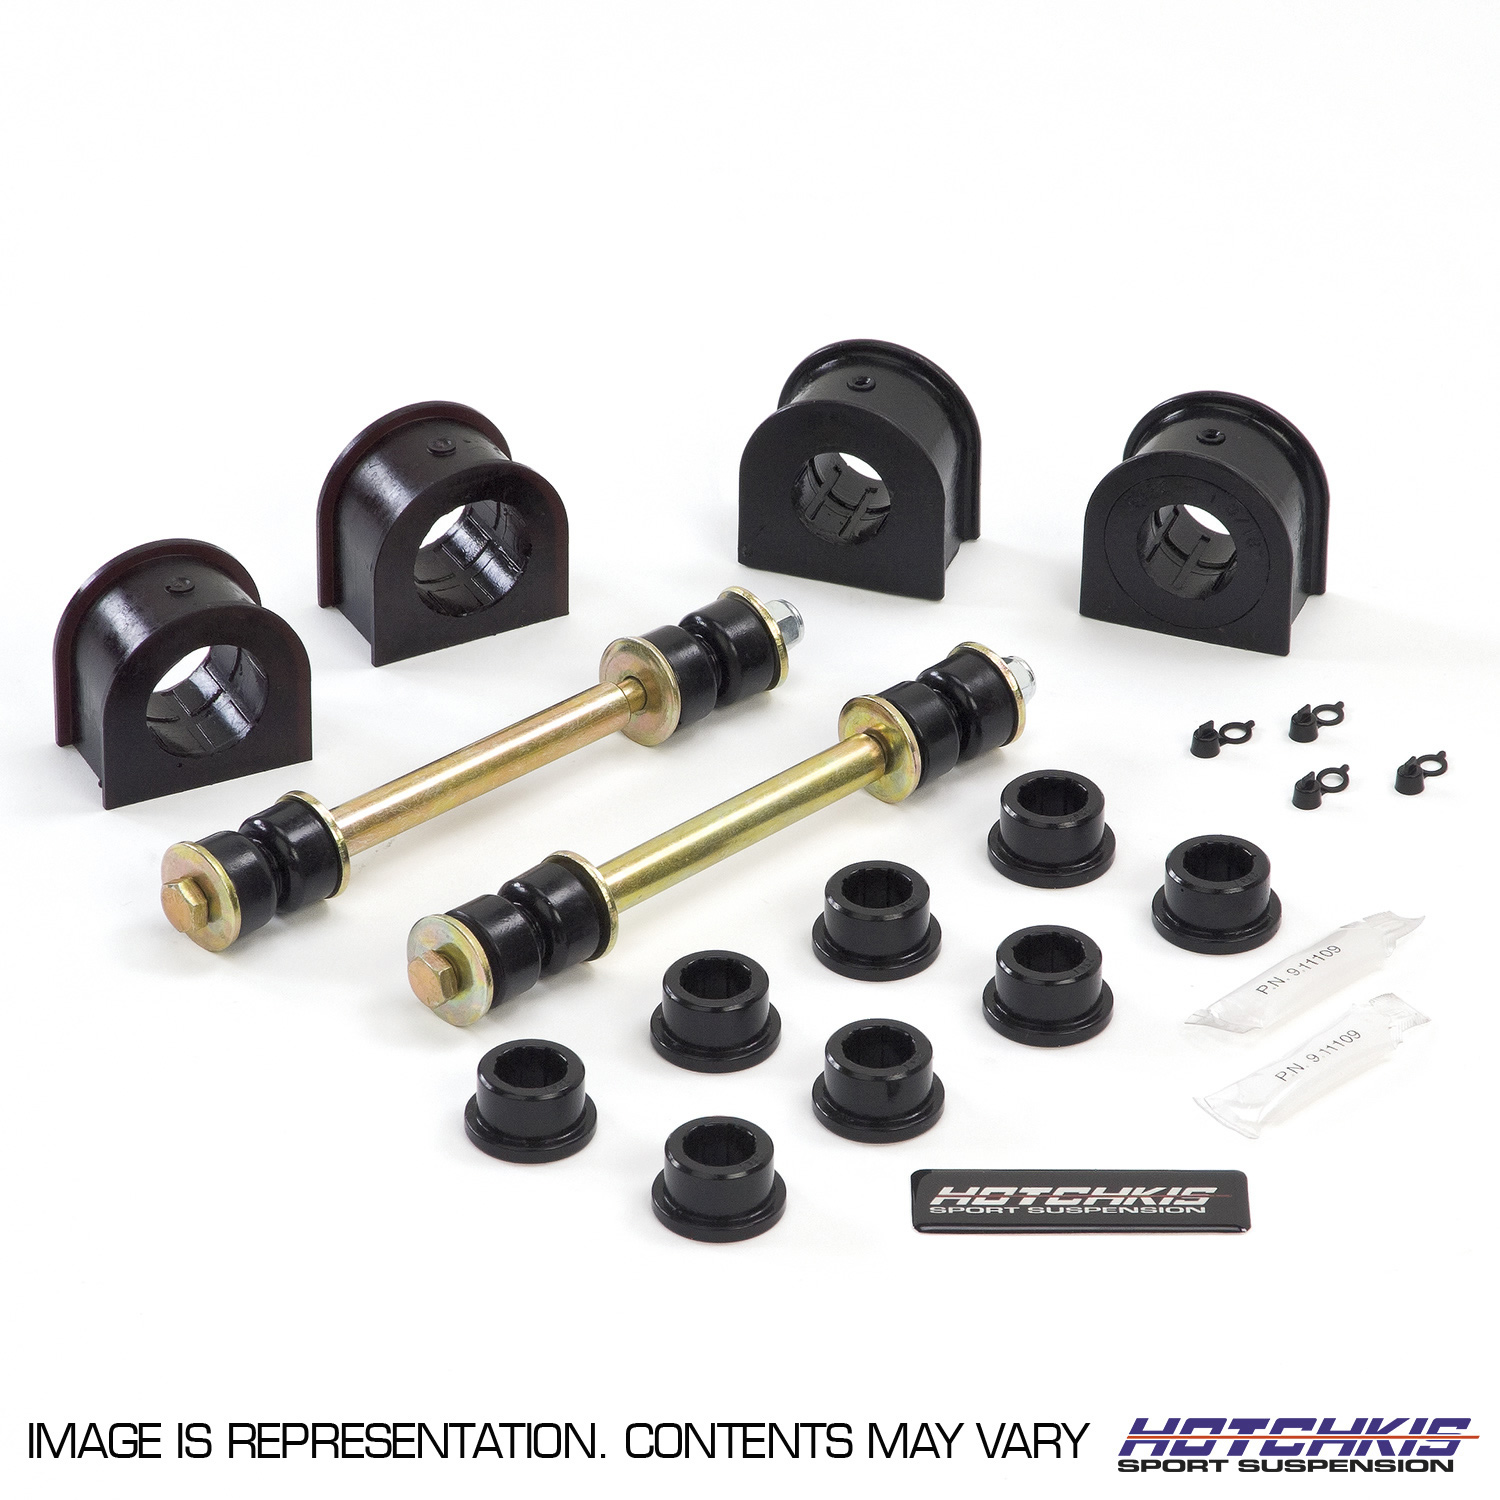 Rebuild Service Kit For Hotchkis Sport Suspension Product Kit 2282R